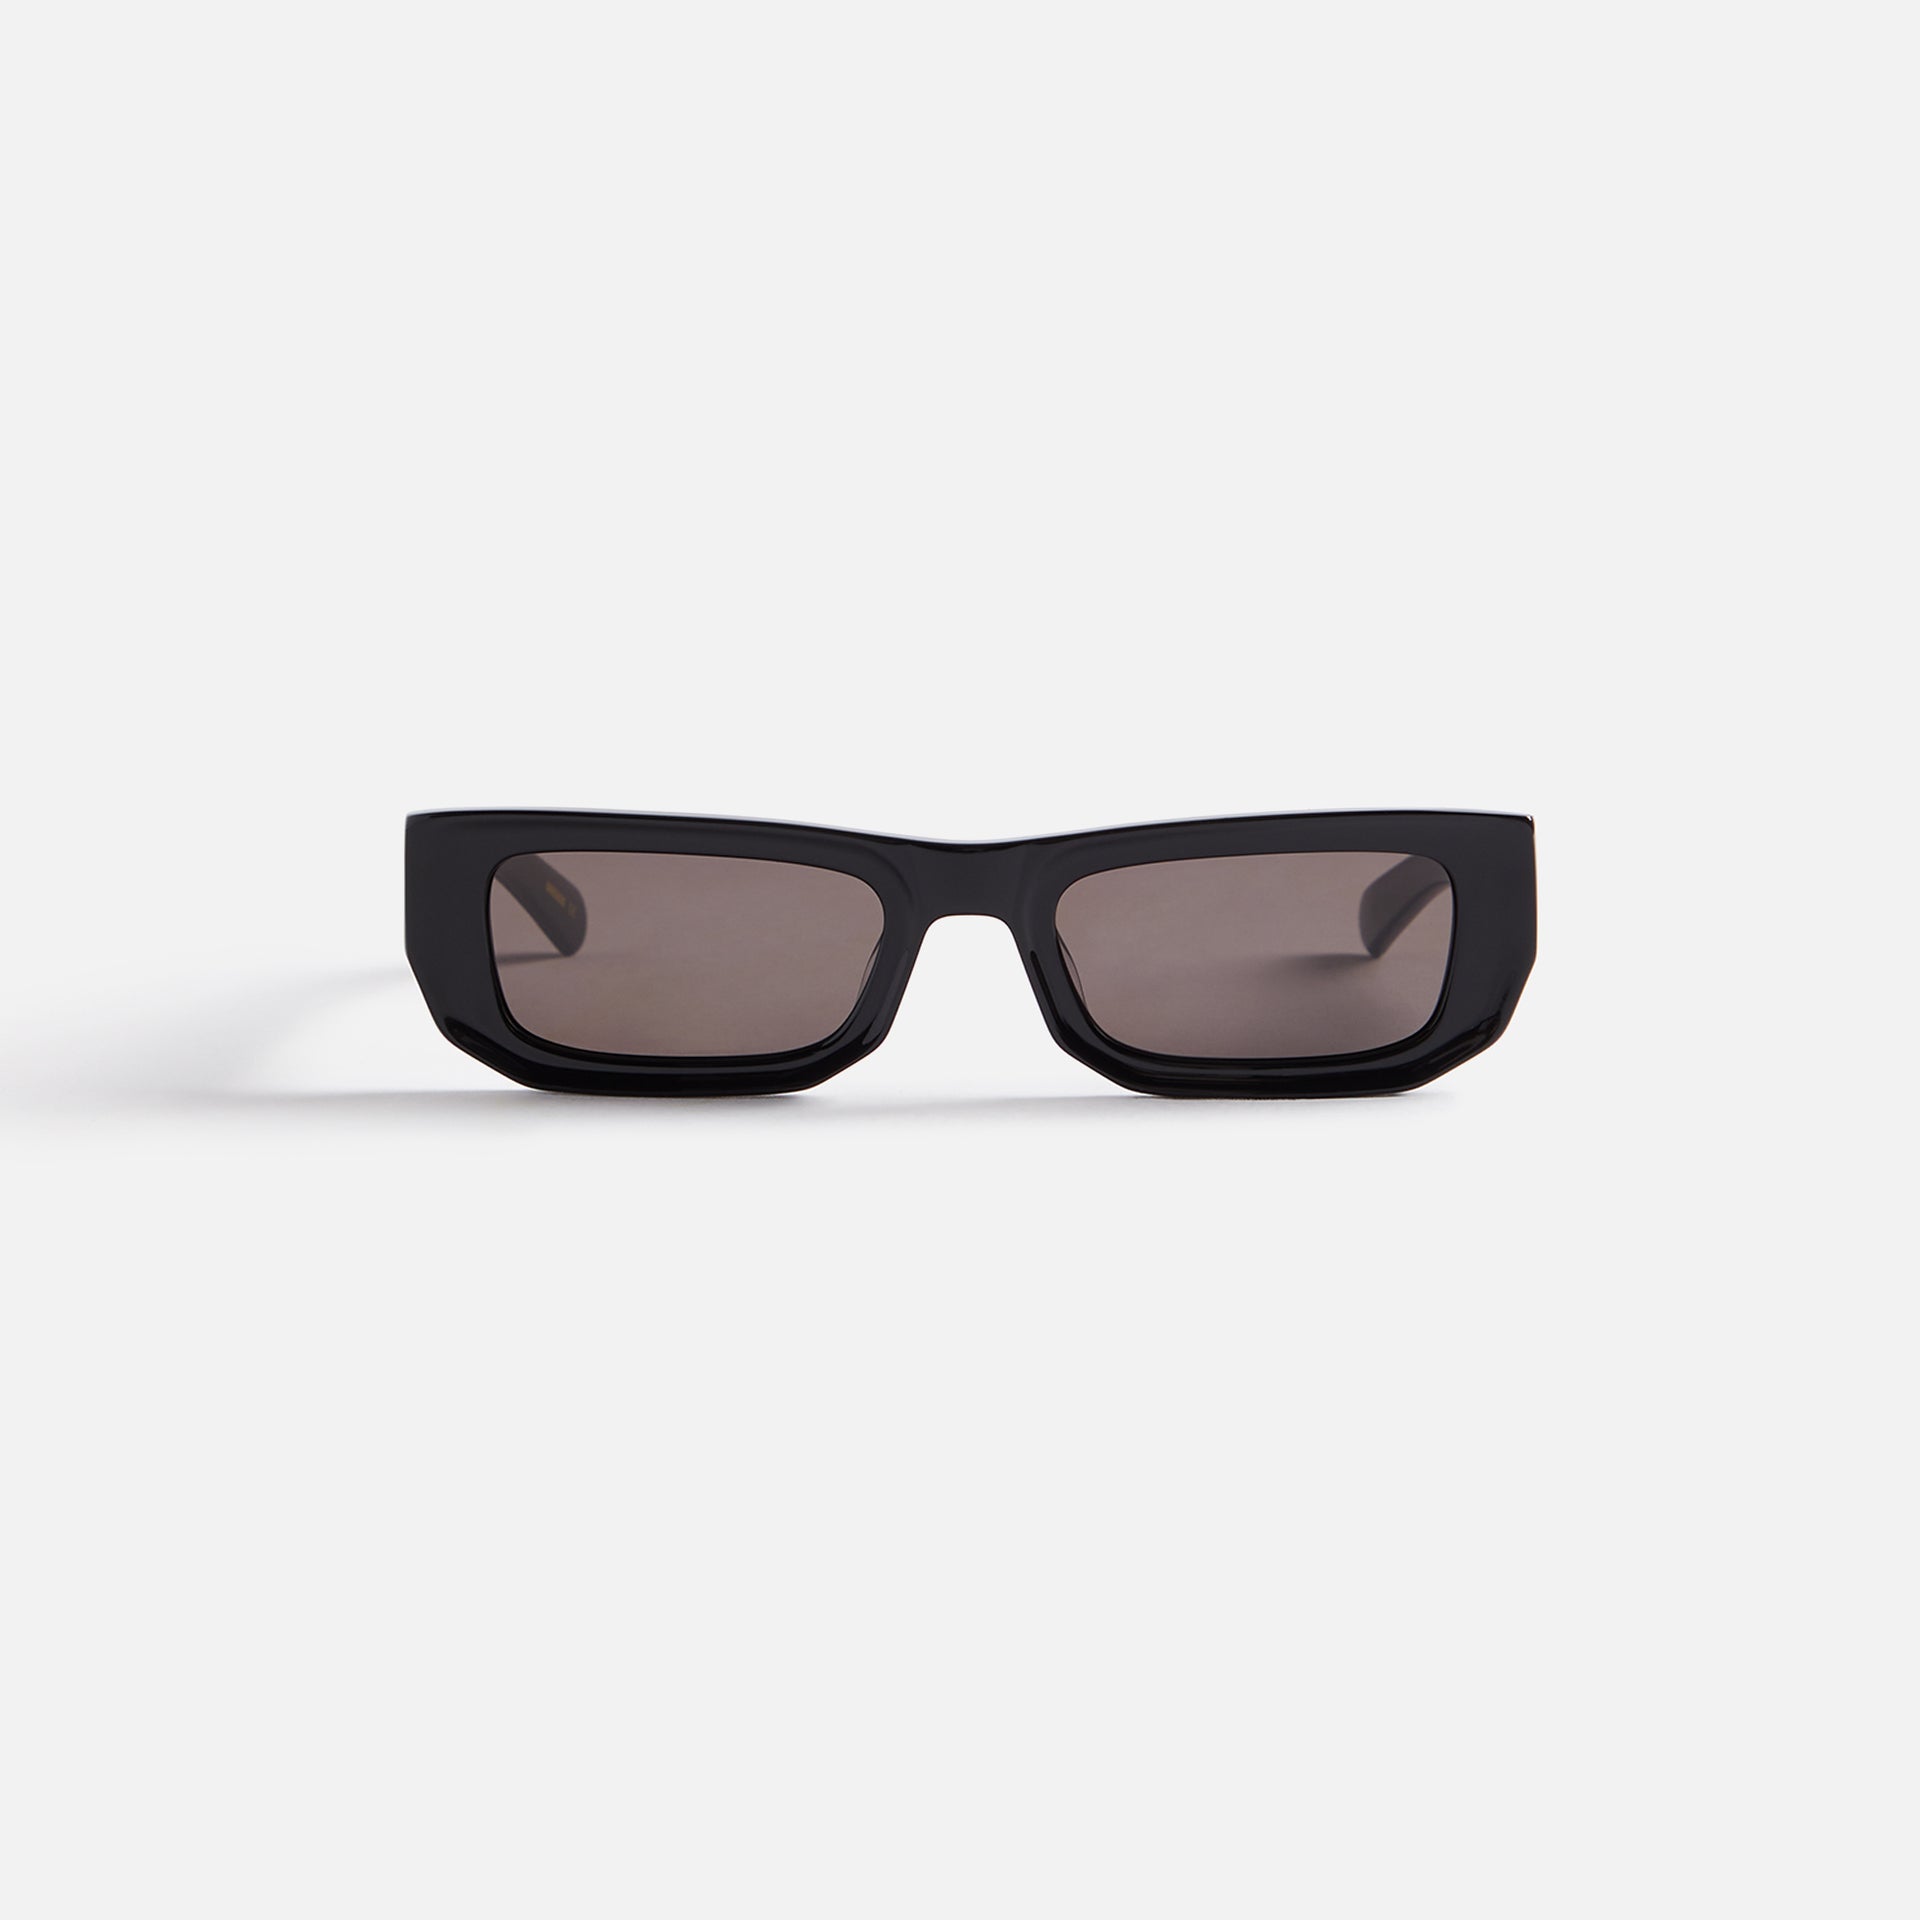 Flatlist Bricktop Sunglasses - Solid Black / Solid Black Lens